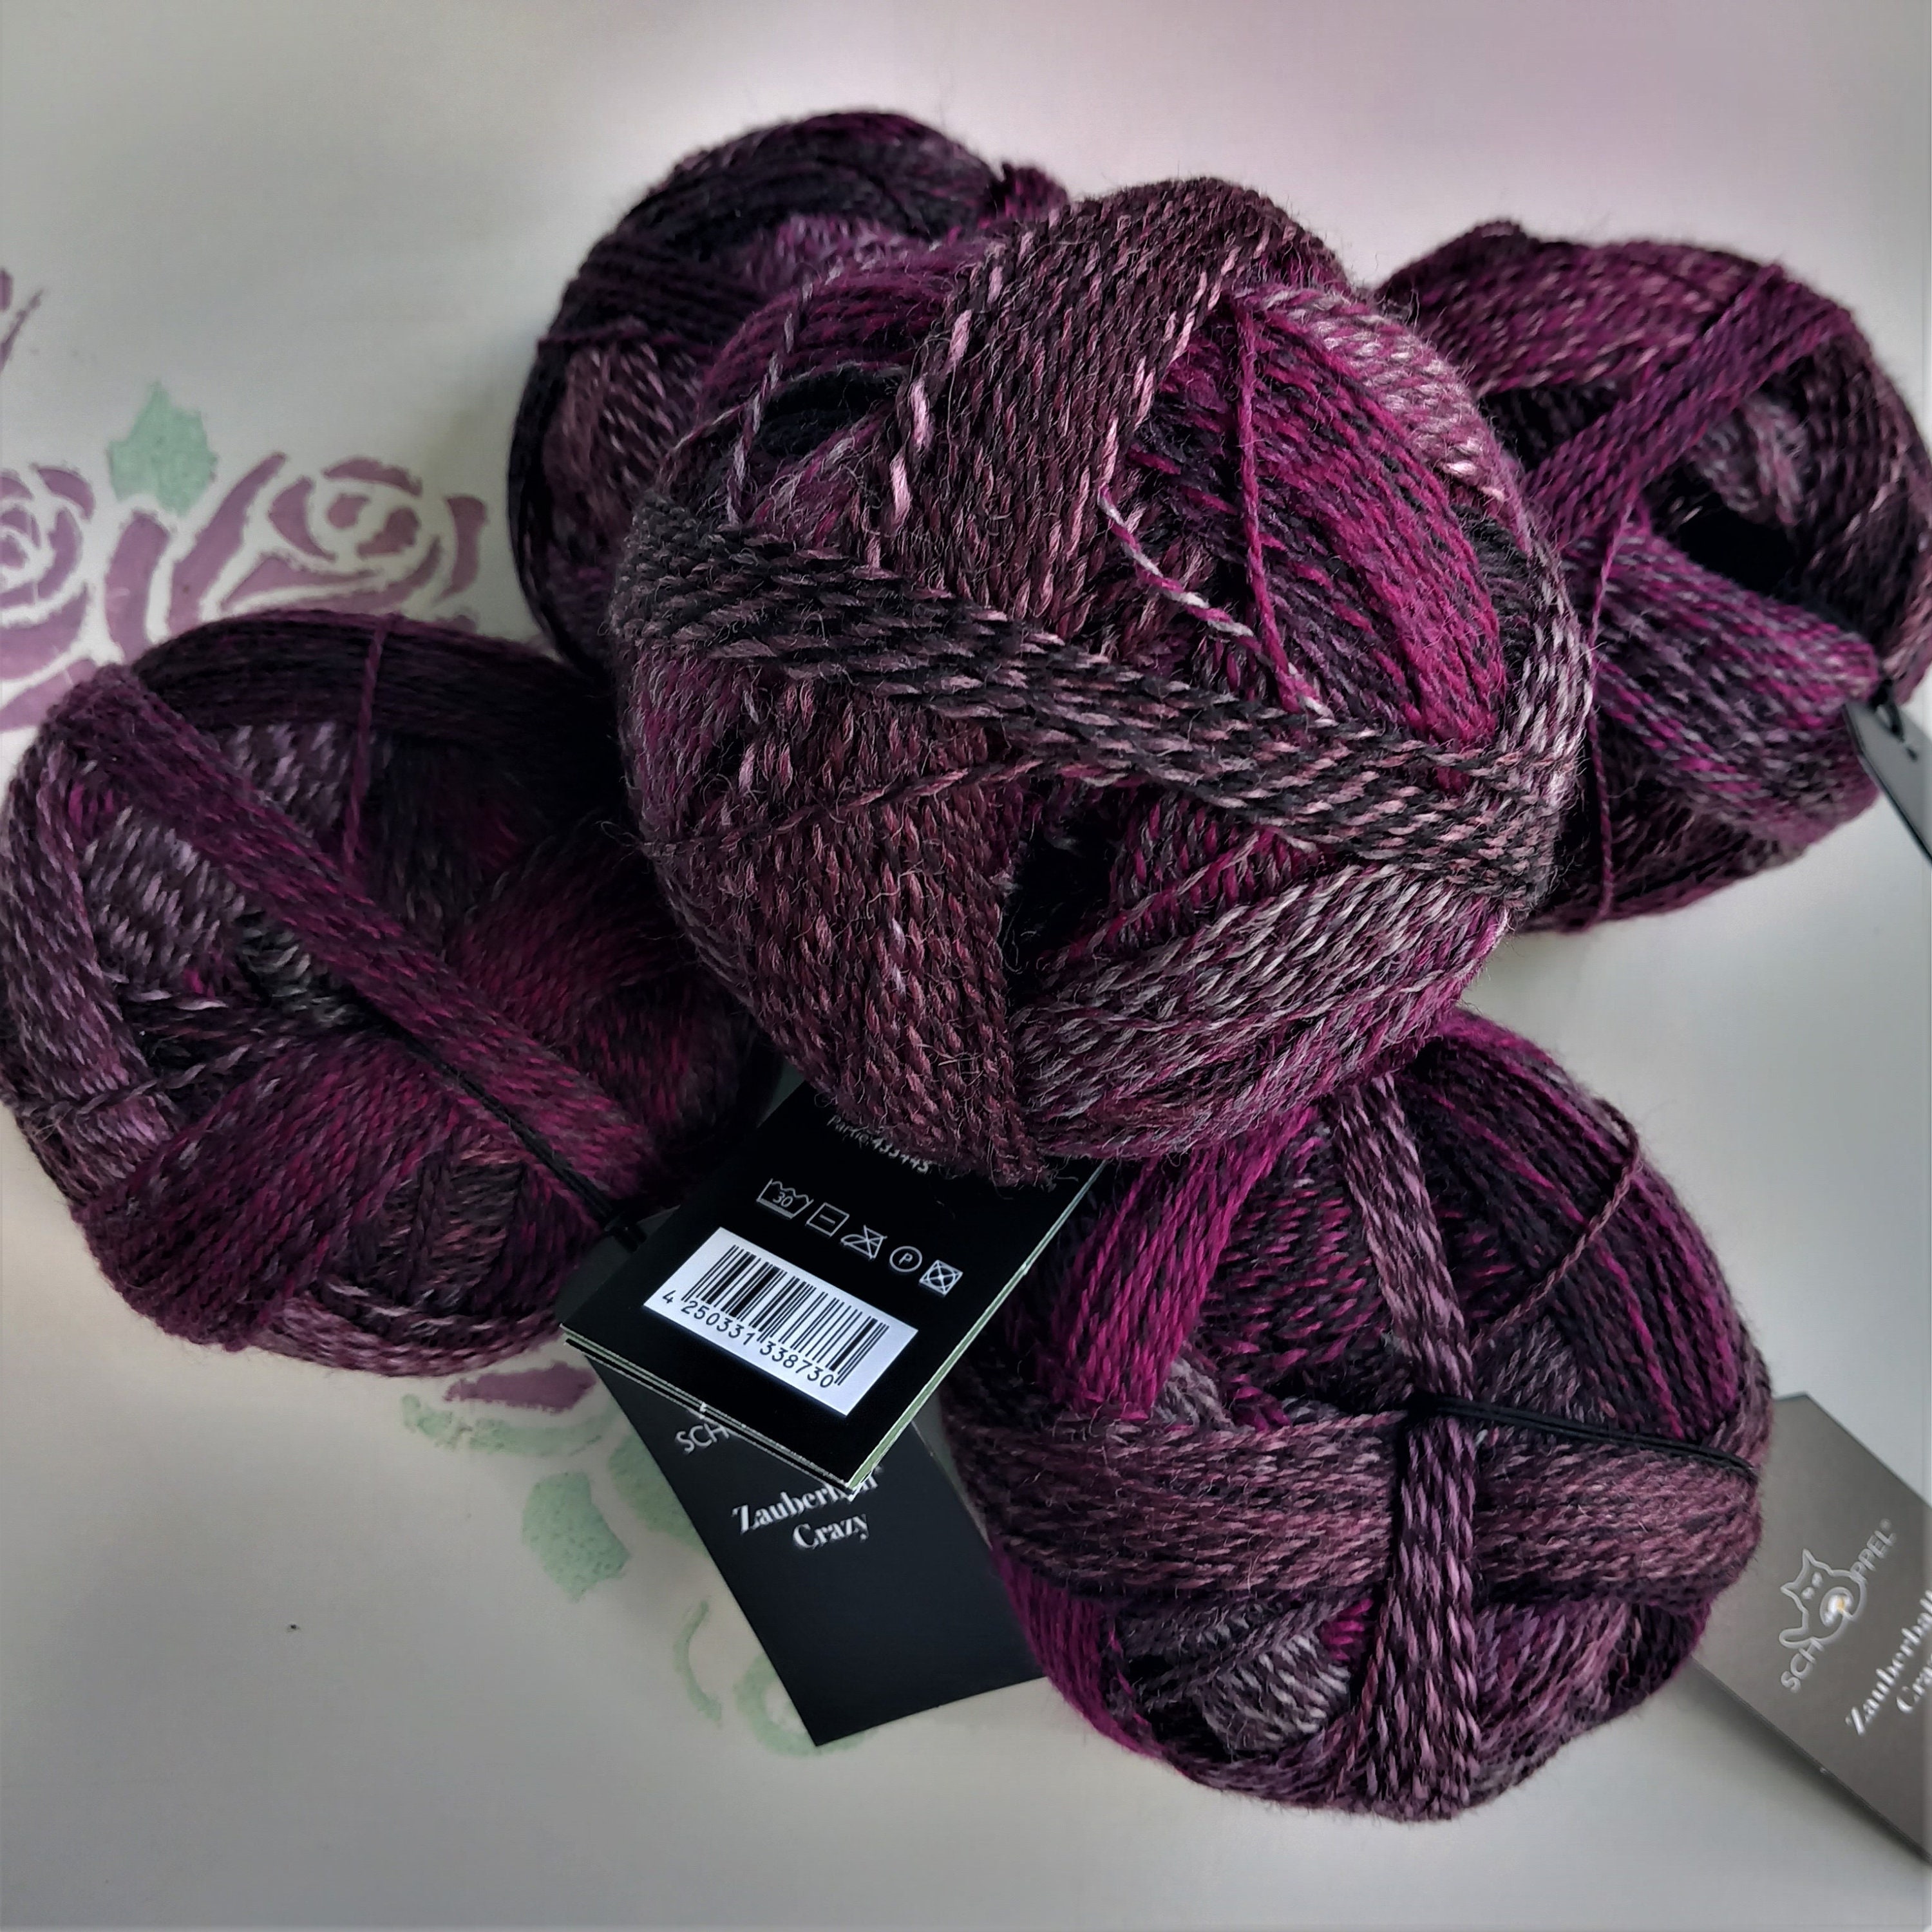 Colorful yarn for knitting Schoppel Zauberball Stärke 6 1701 Parrot Virgin  Wool, Biodegradable Nylon. Colored gradient sport DK sock-wool